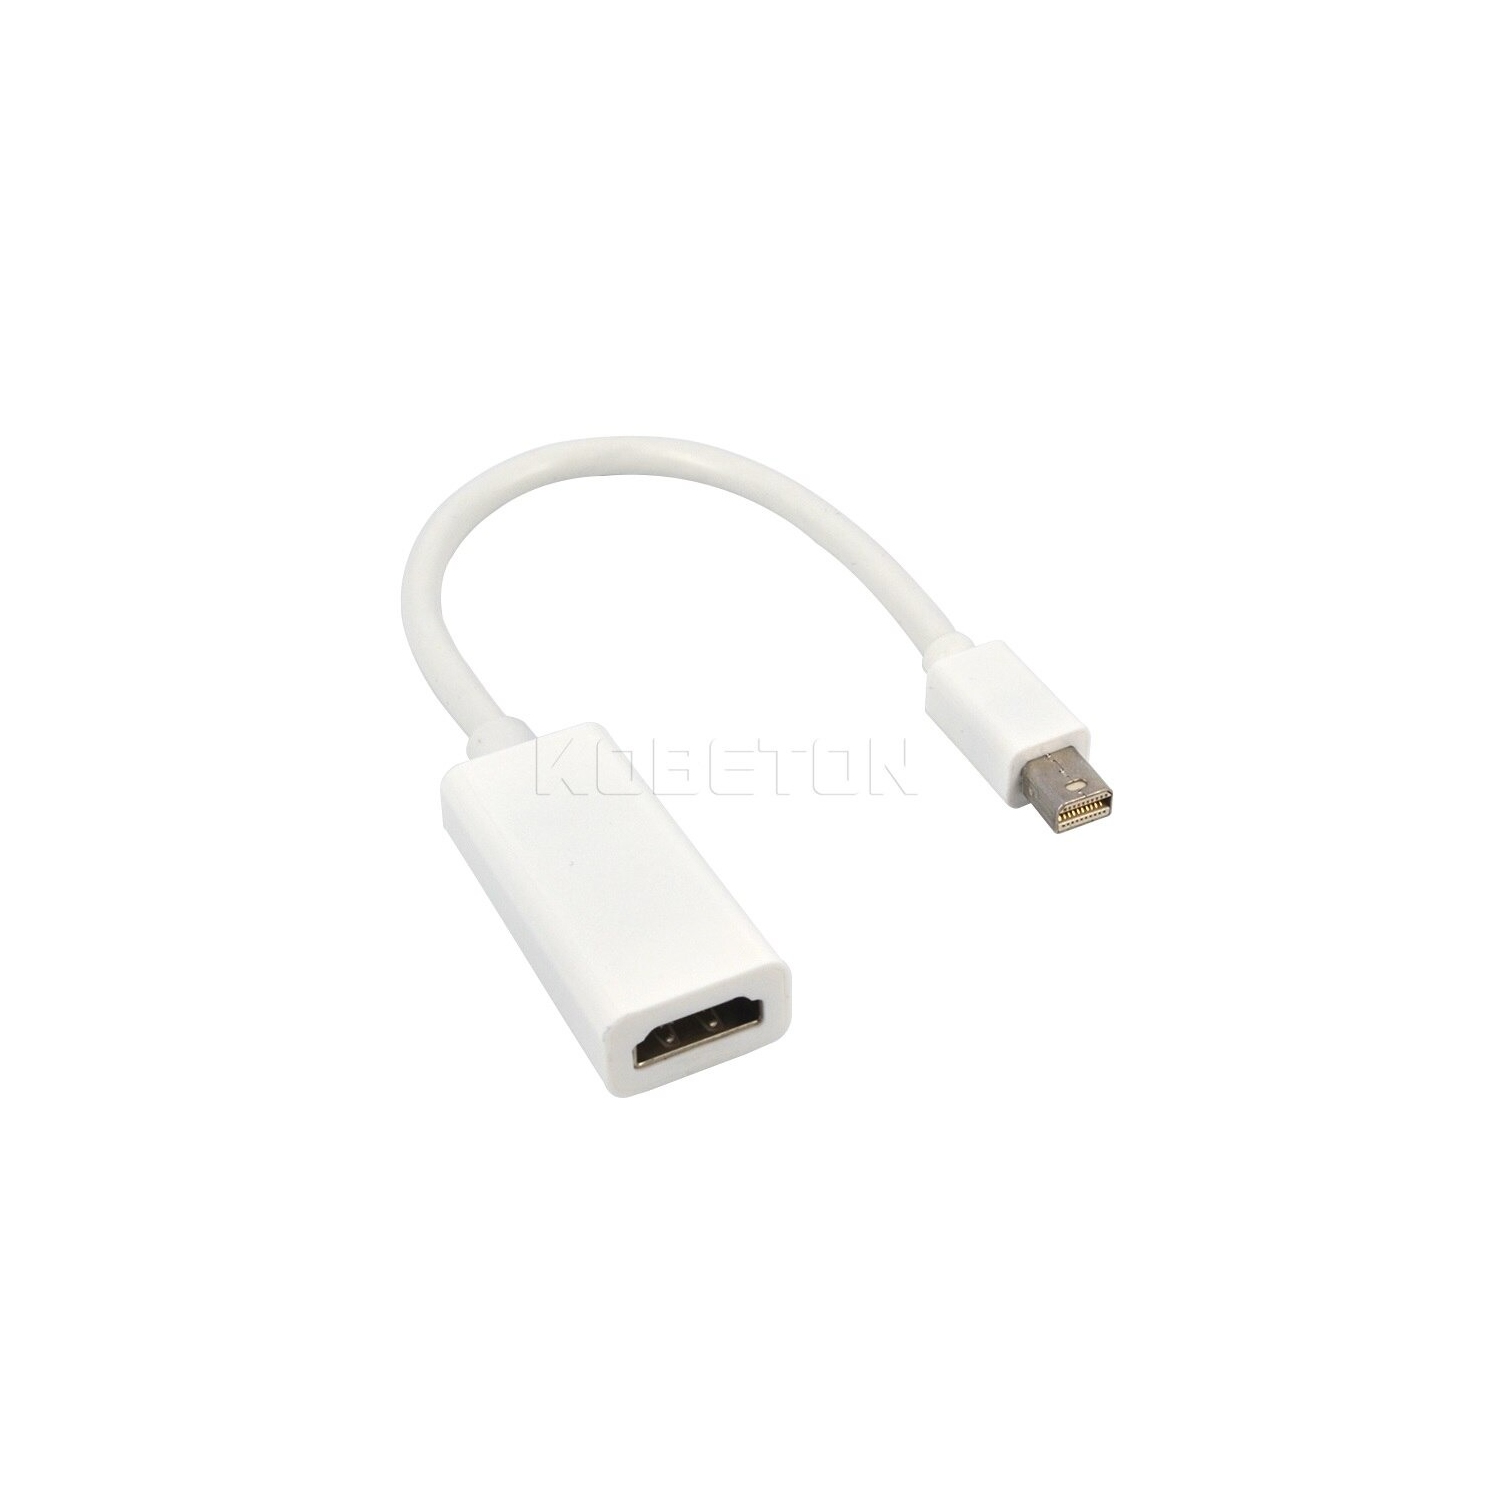 Mini DisplayPort to HDMI Adapter Cable For MacBook Pro & iMac Thunderbolt Mini DP Display Port To HDMI Converter